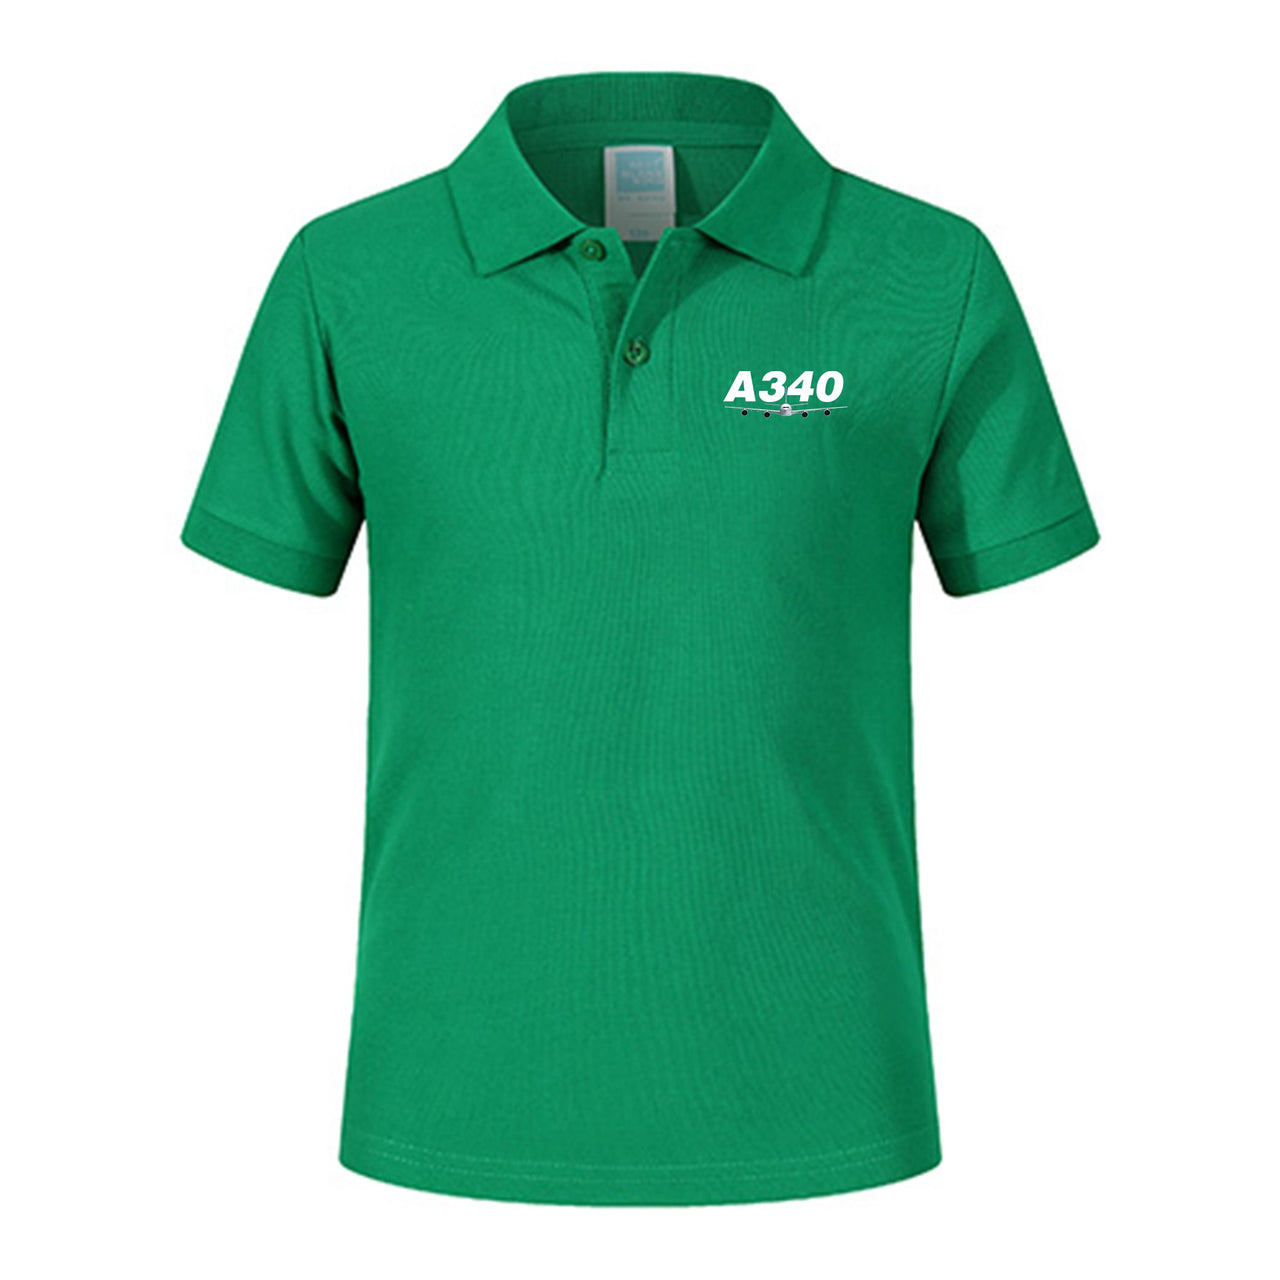 Super Airbus A340 Designed Children Polo T-Shirts